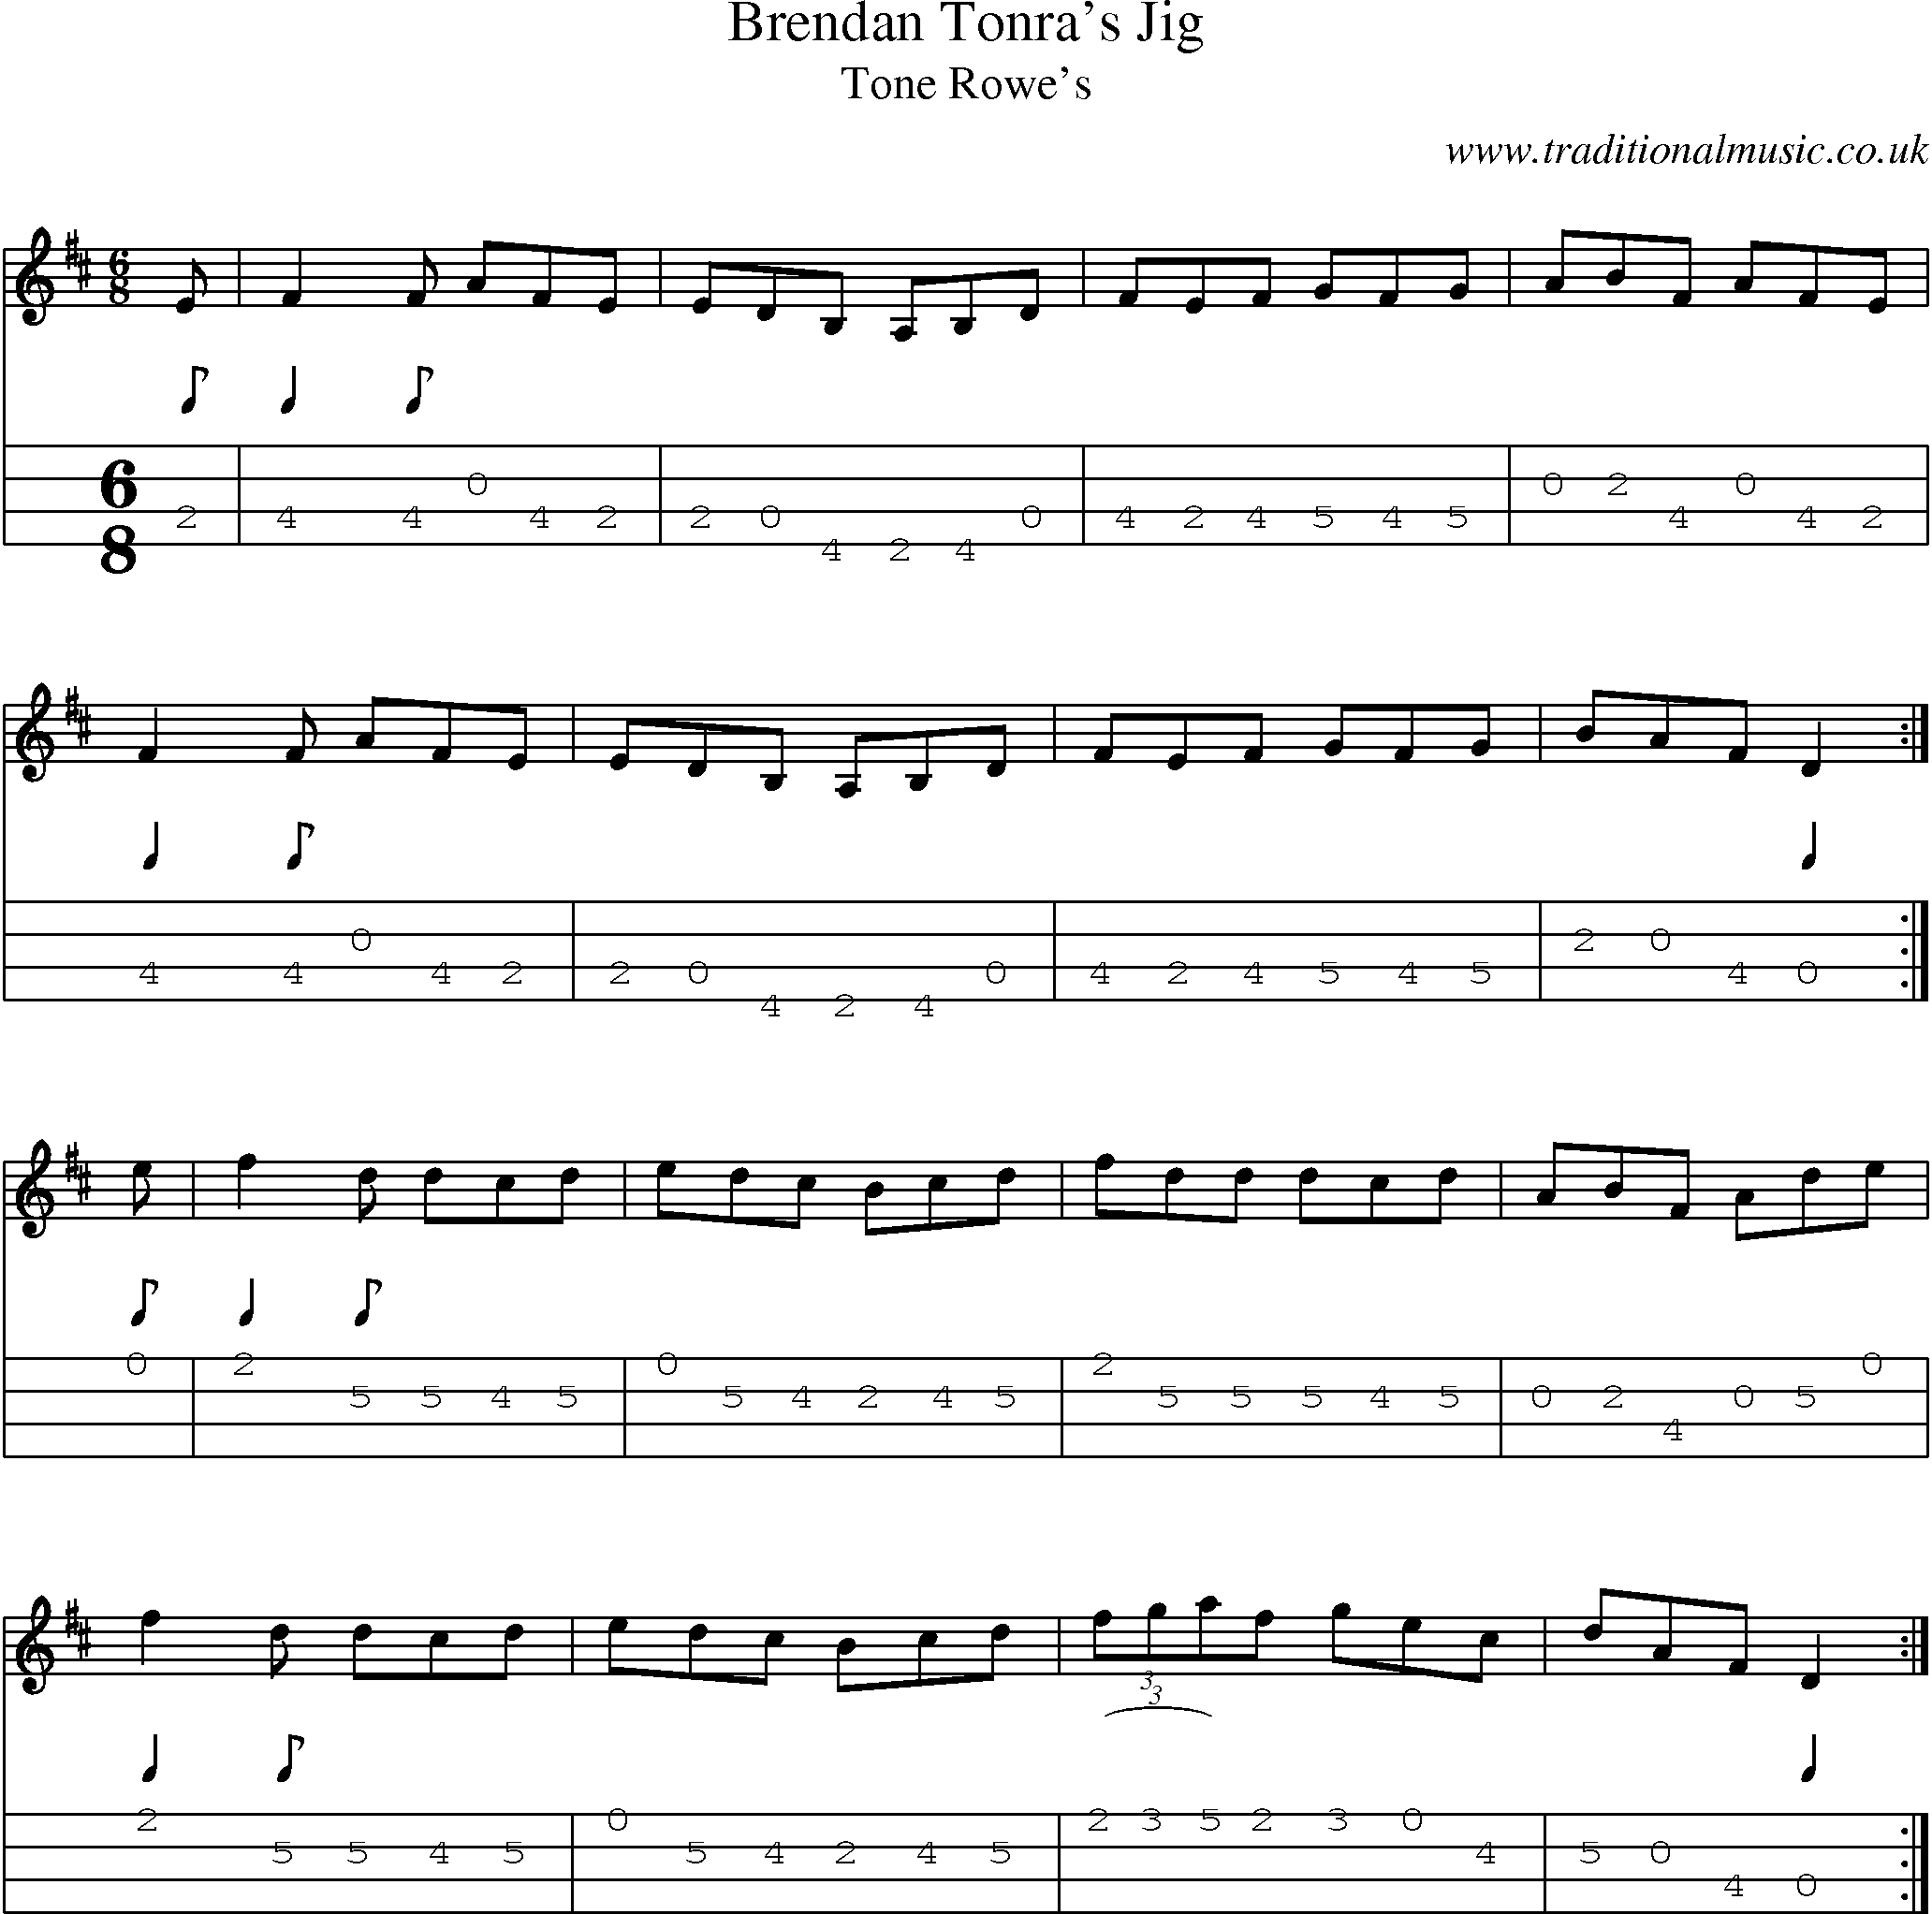 Music Score and Mandolin Tabs for Brendan Tonras Jig